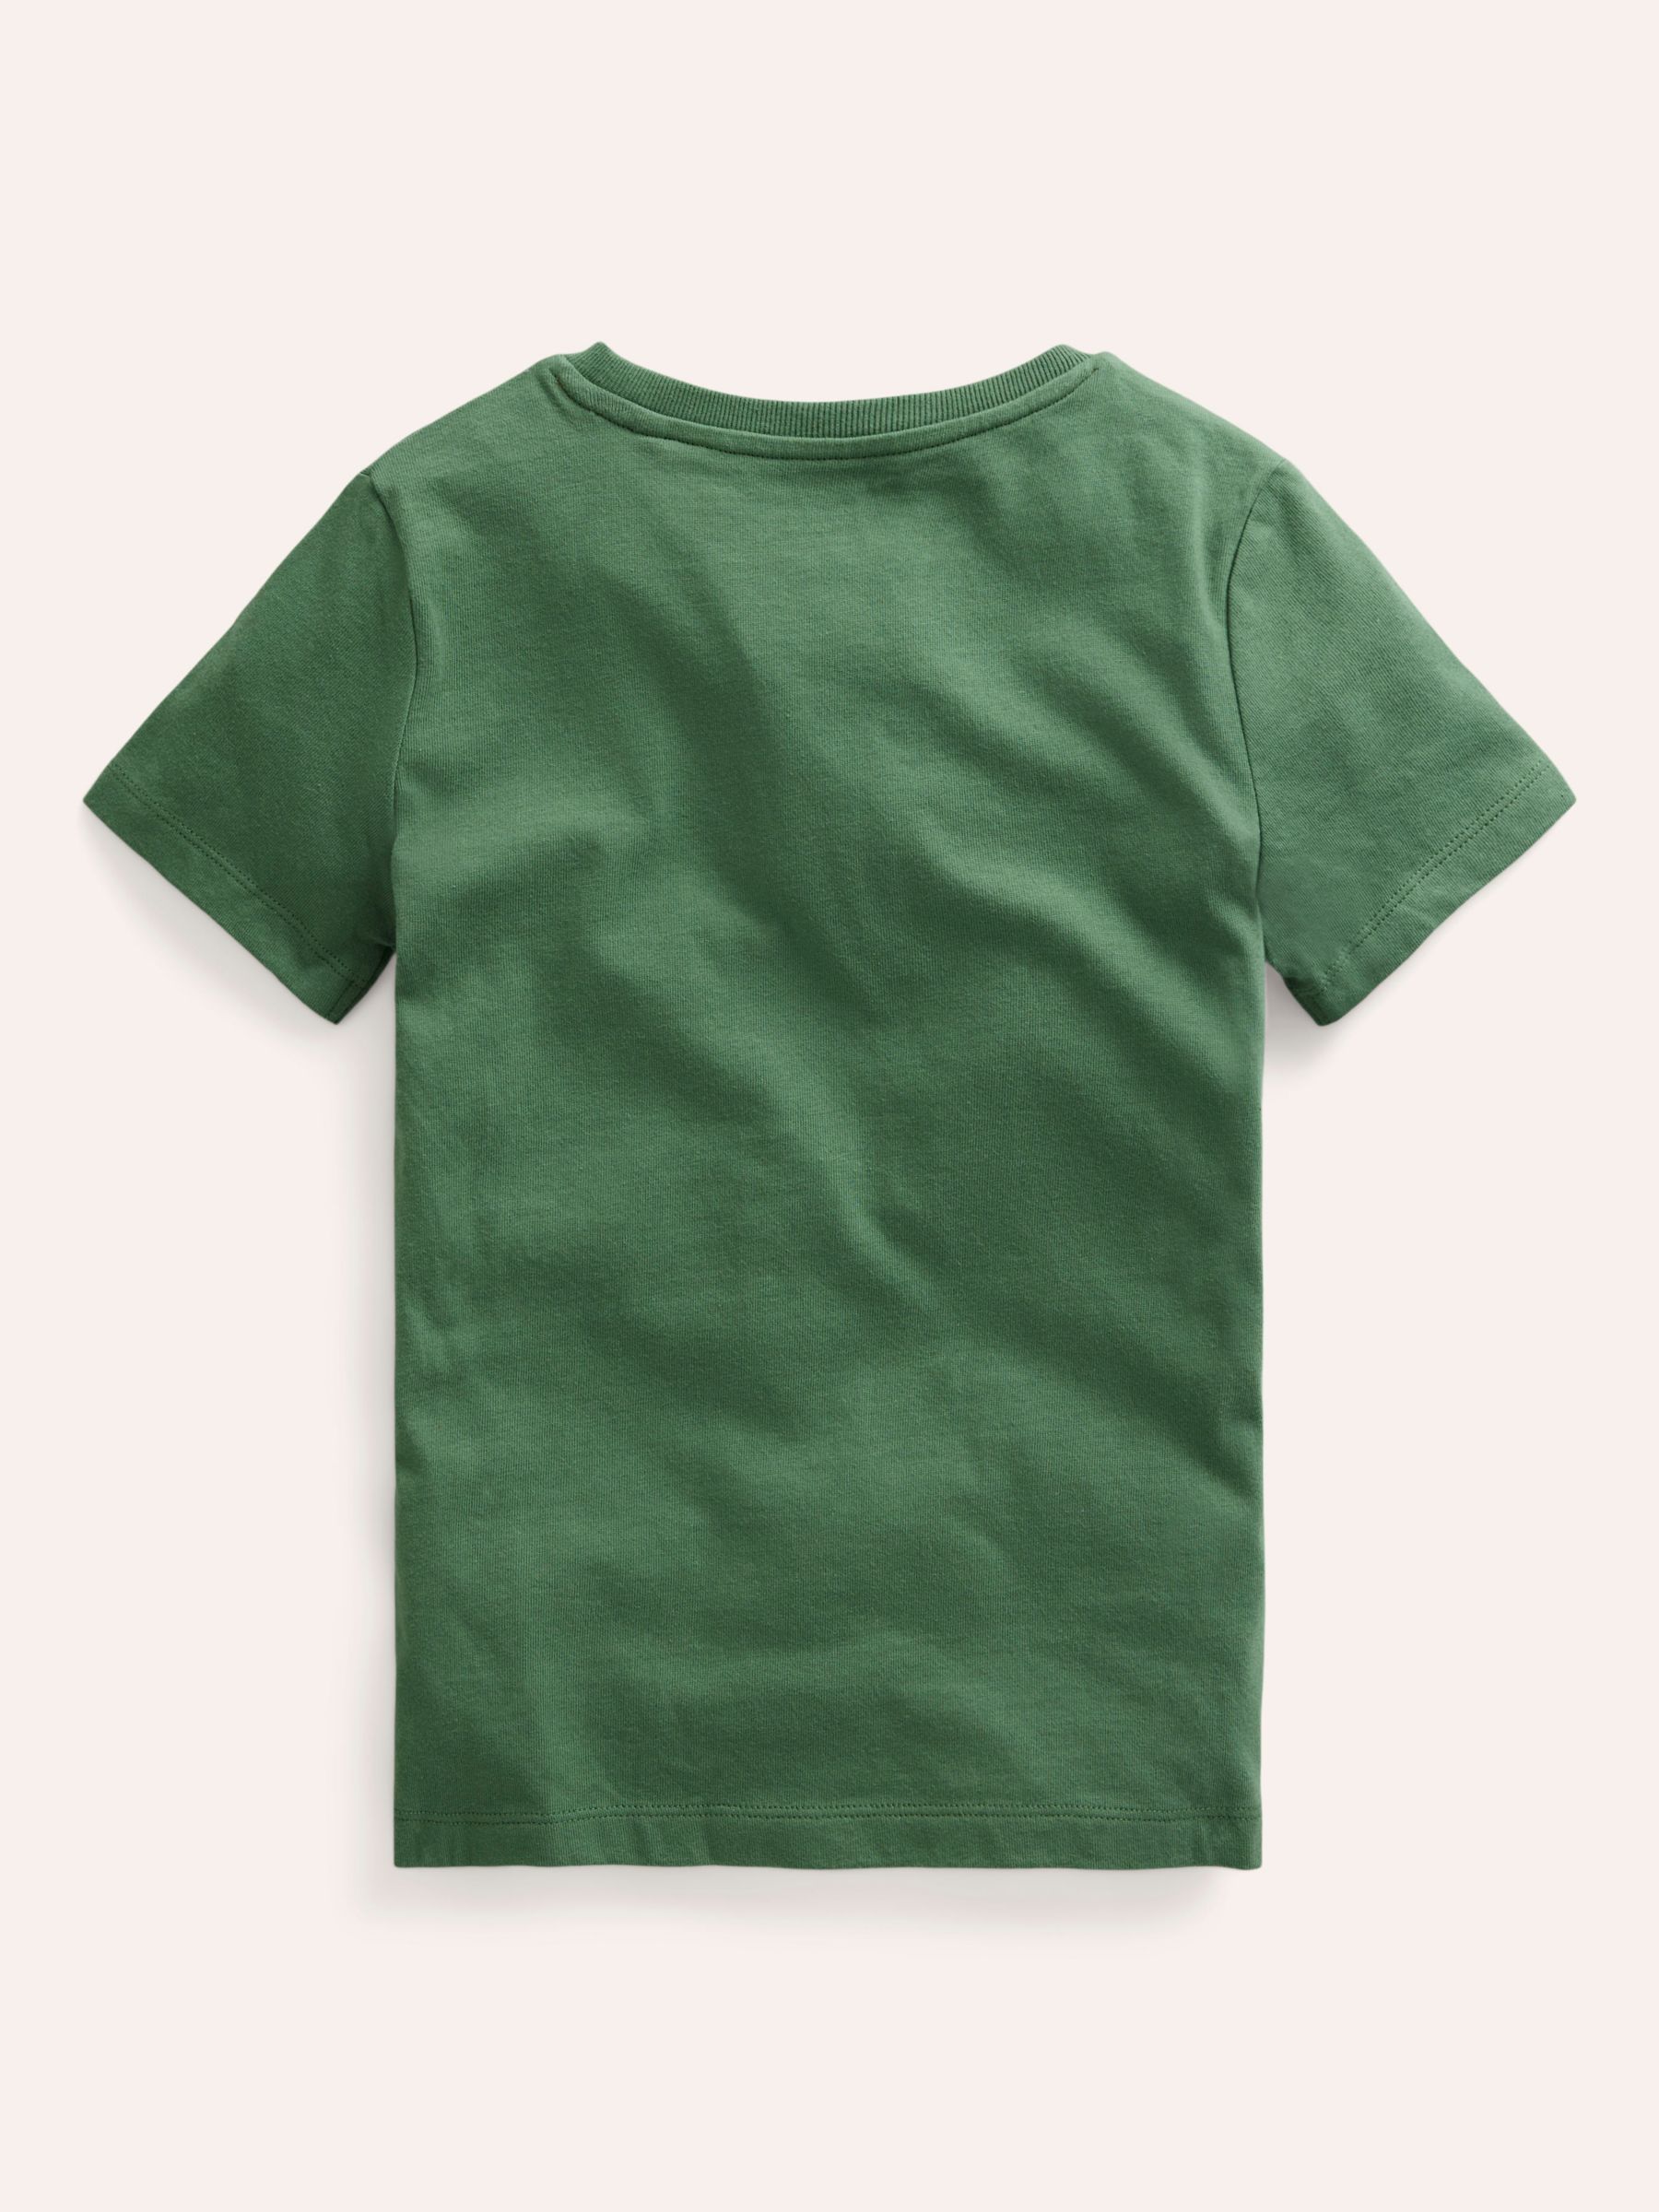 Mini Boden Kids' Chainstitch Crocodile T-Shirt, Green/Multi, 2-3 years